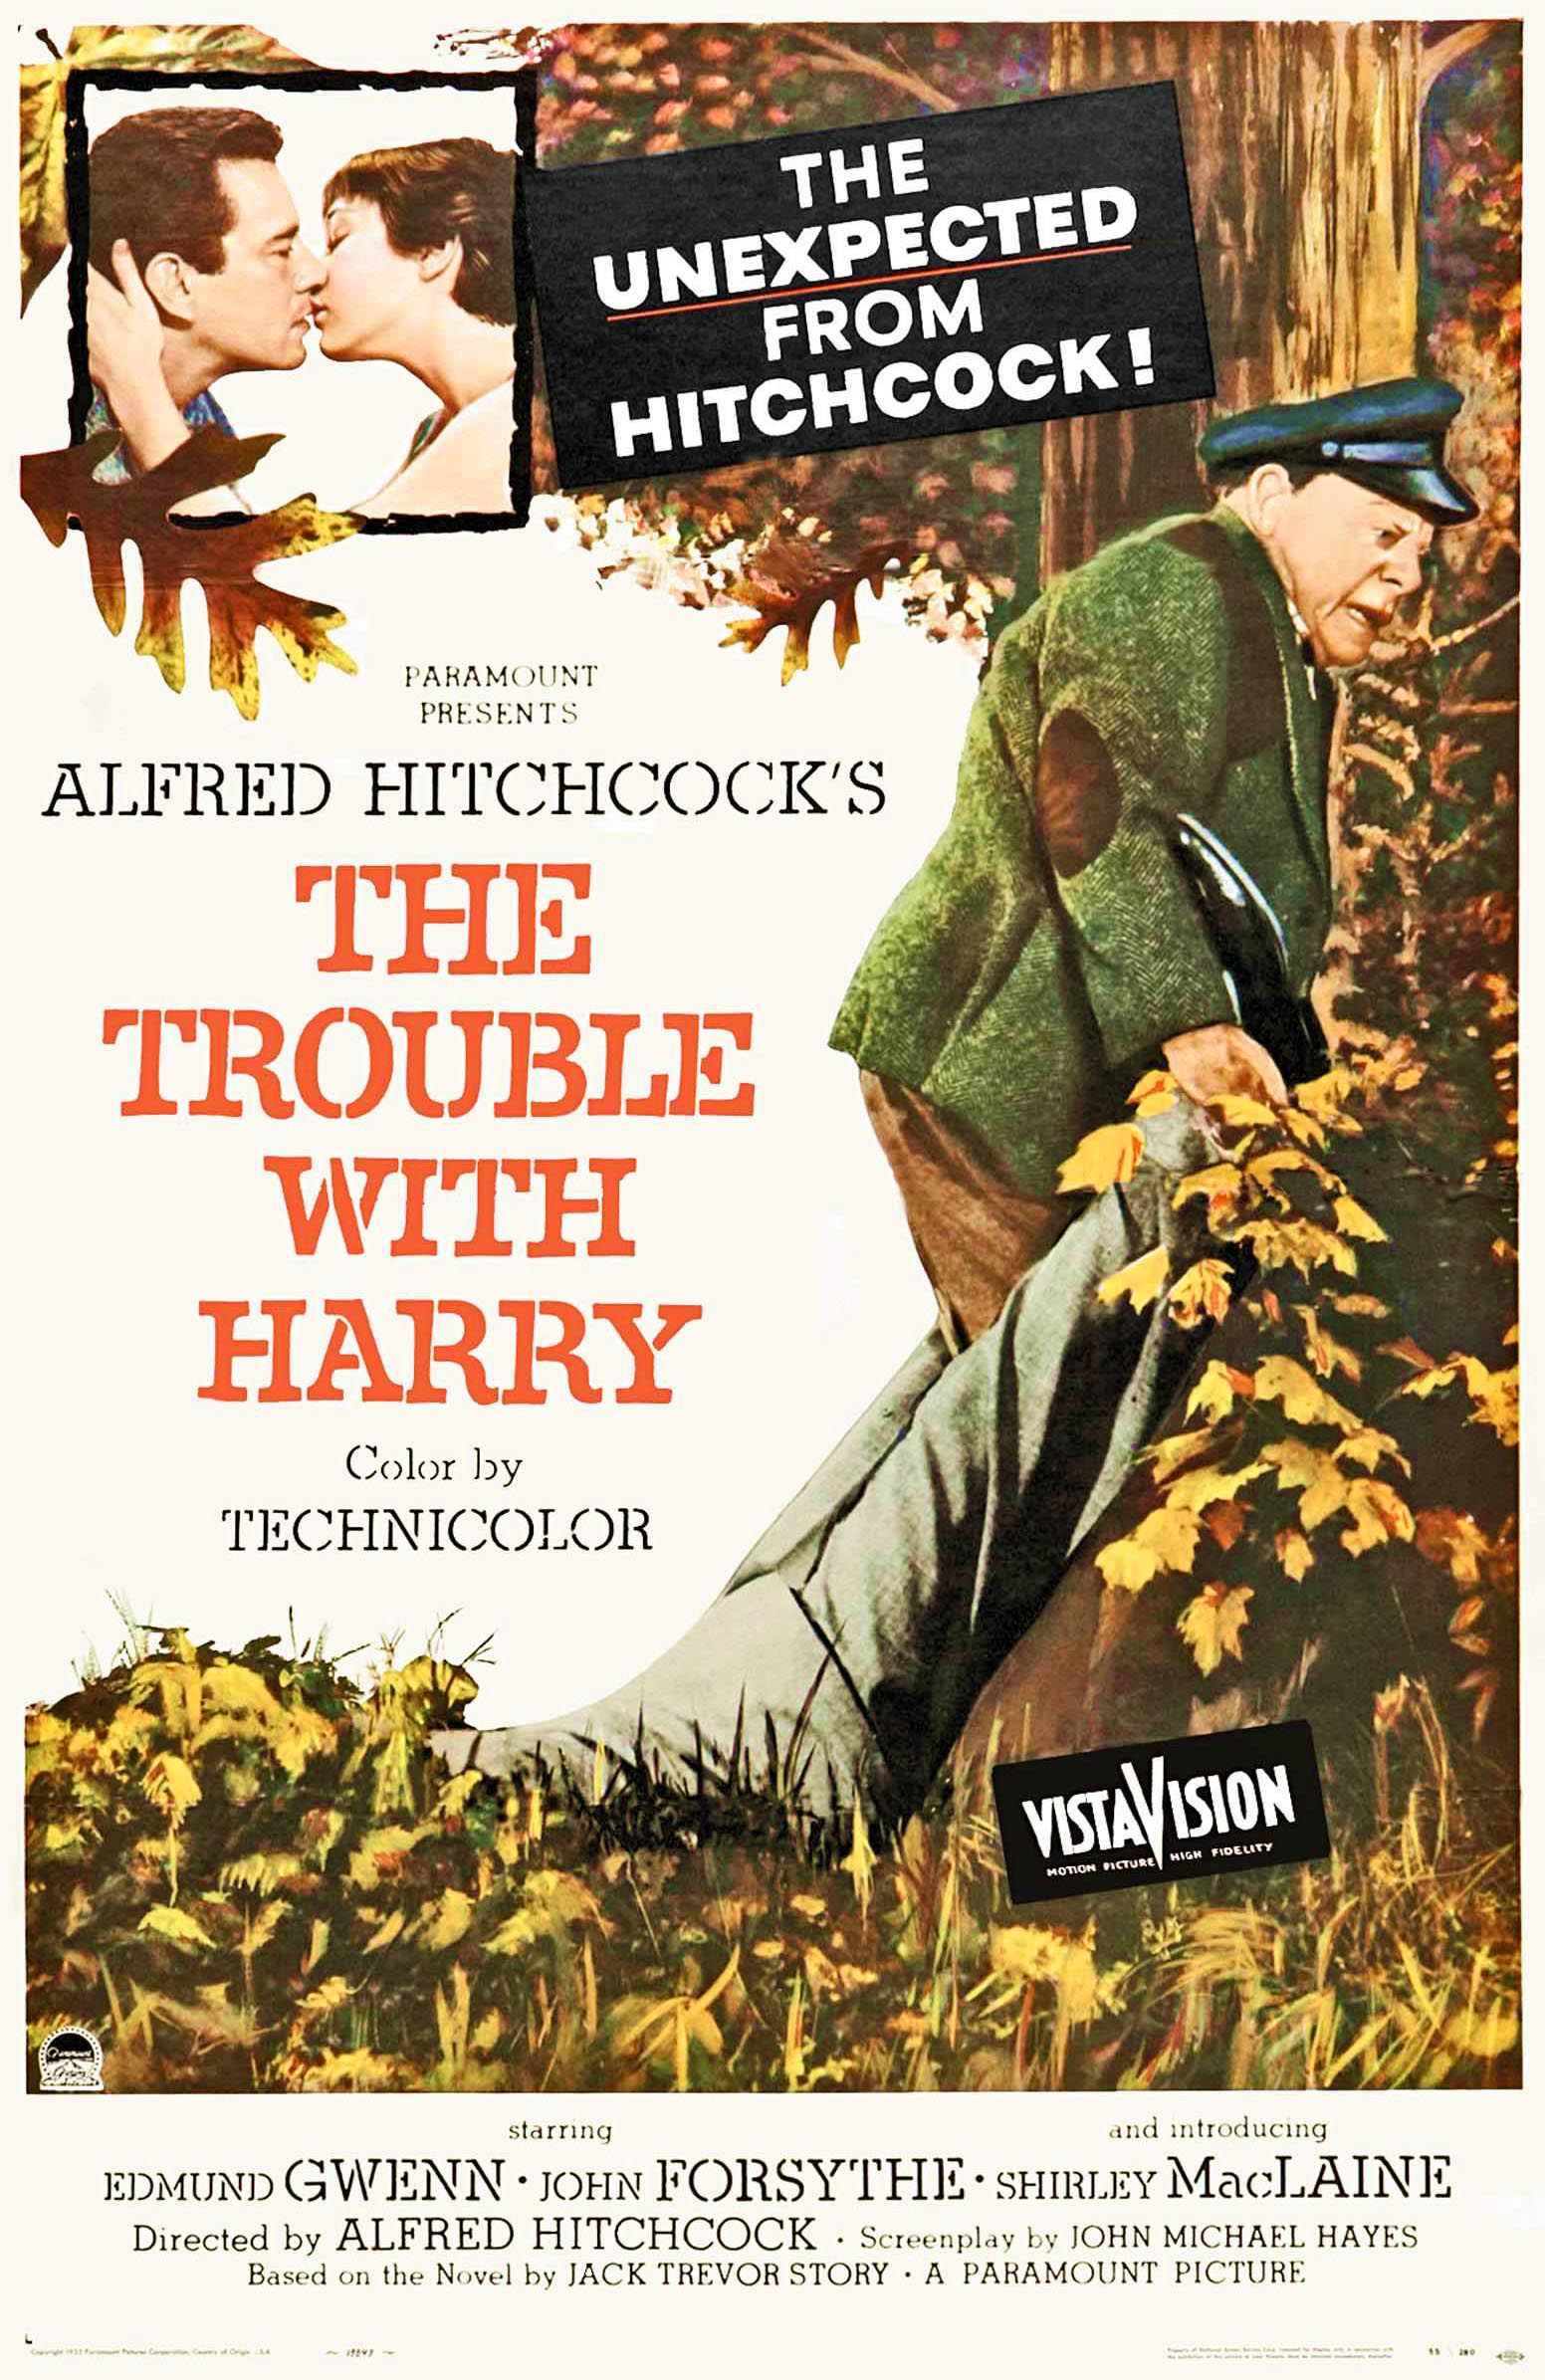 Nonton film The Trouble with Harry layarkaca21 indoxx1 ganool online streaming terbaru